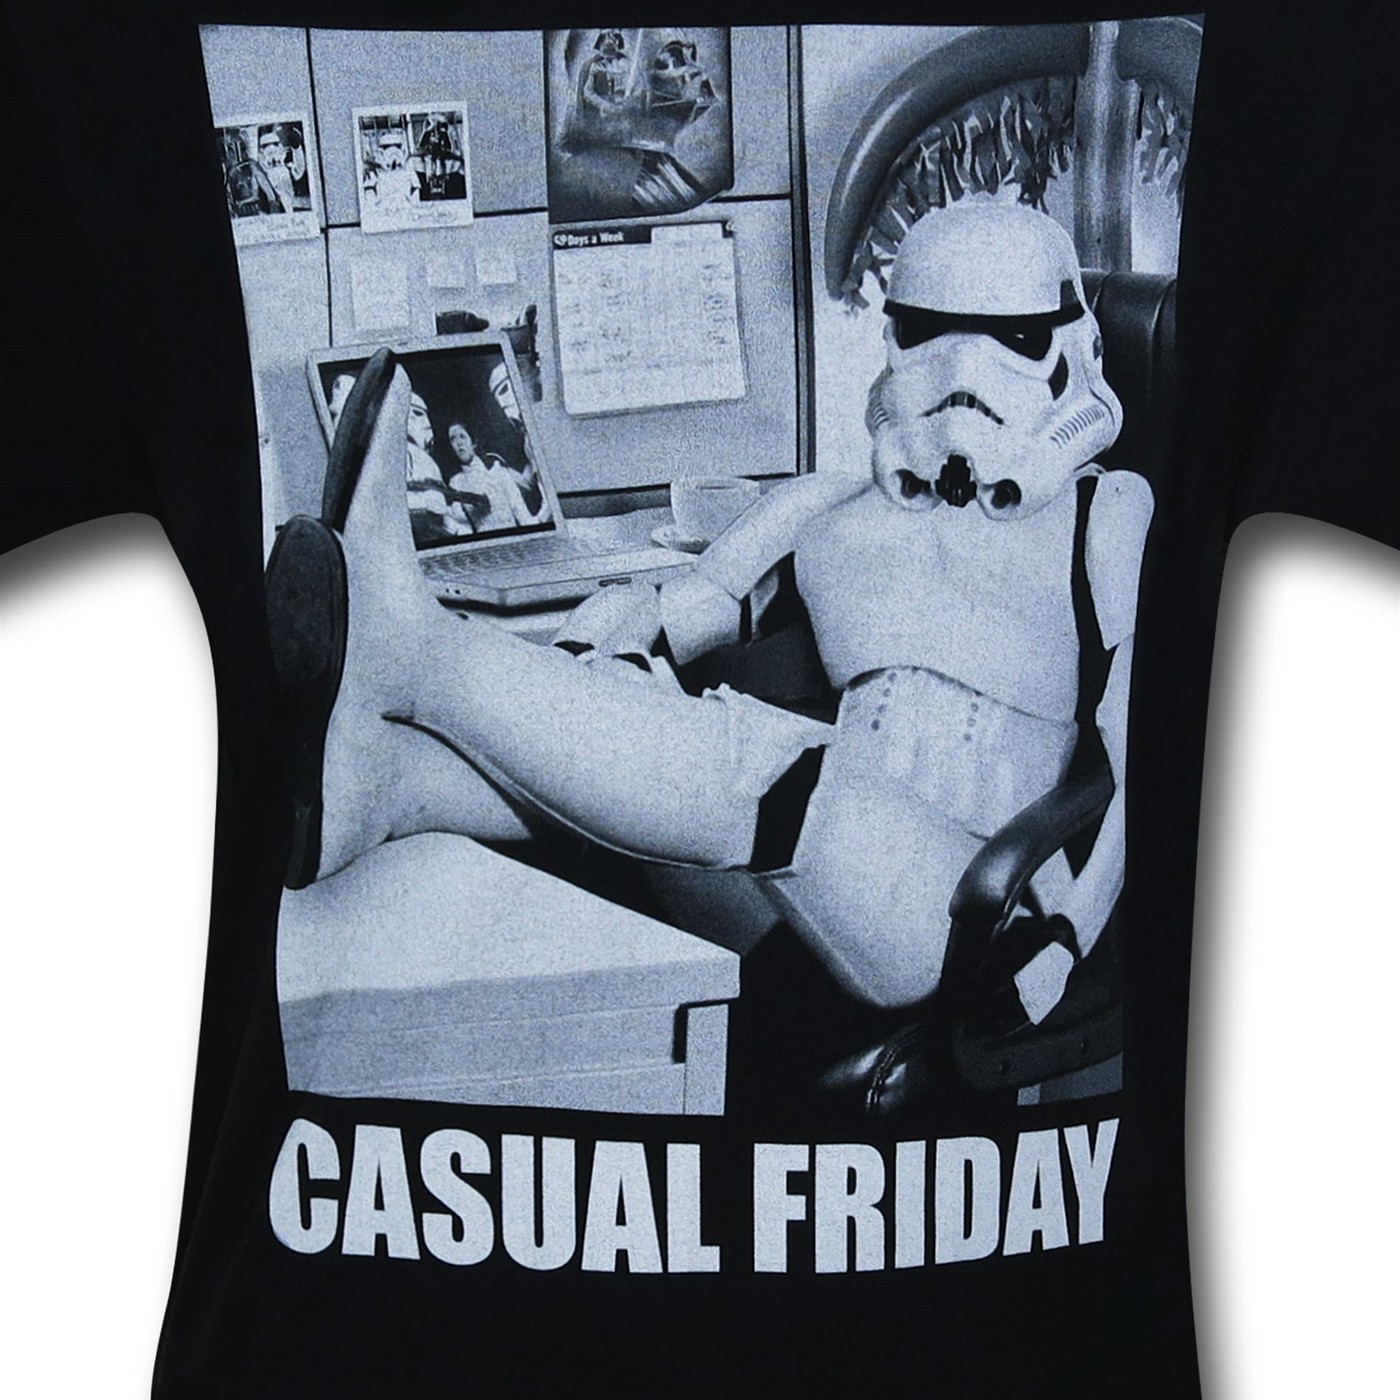 Star Wars Casual Trooper T-Shirt